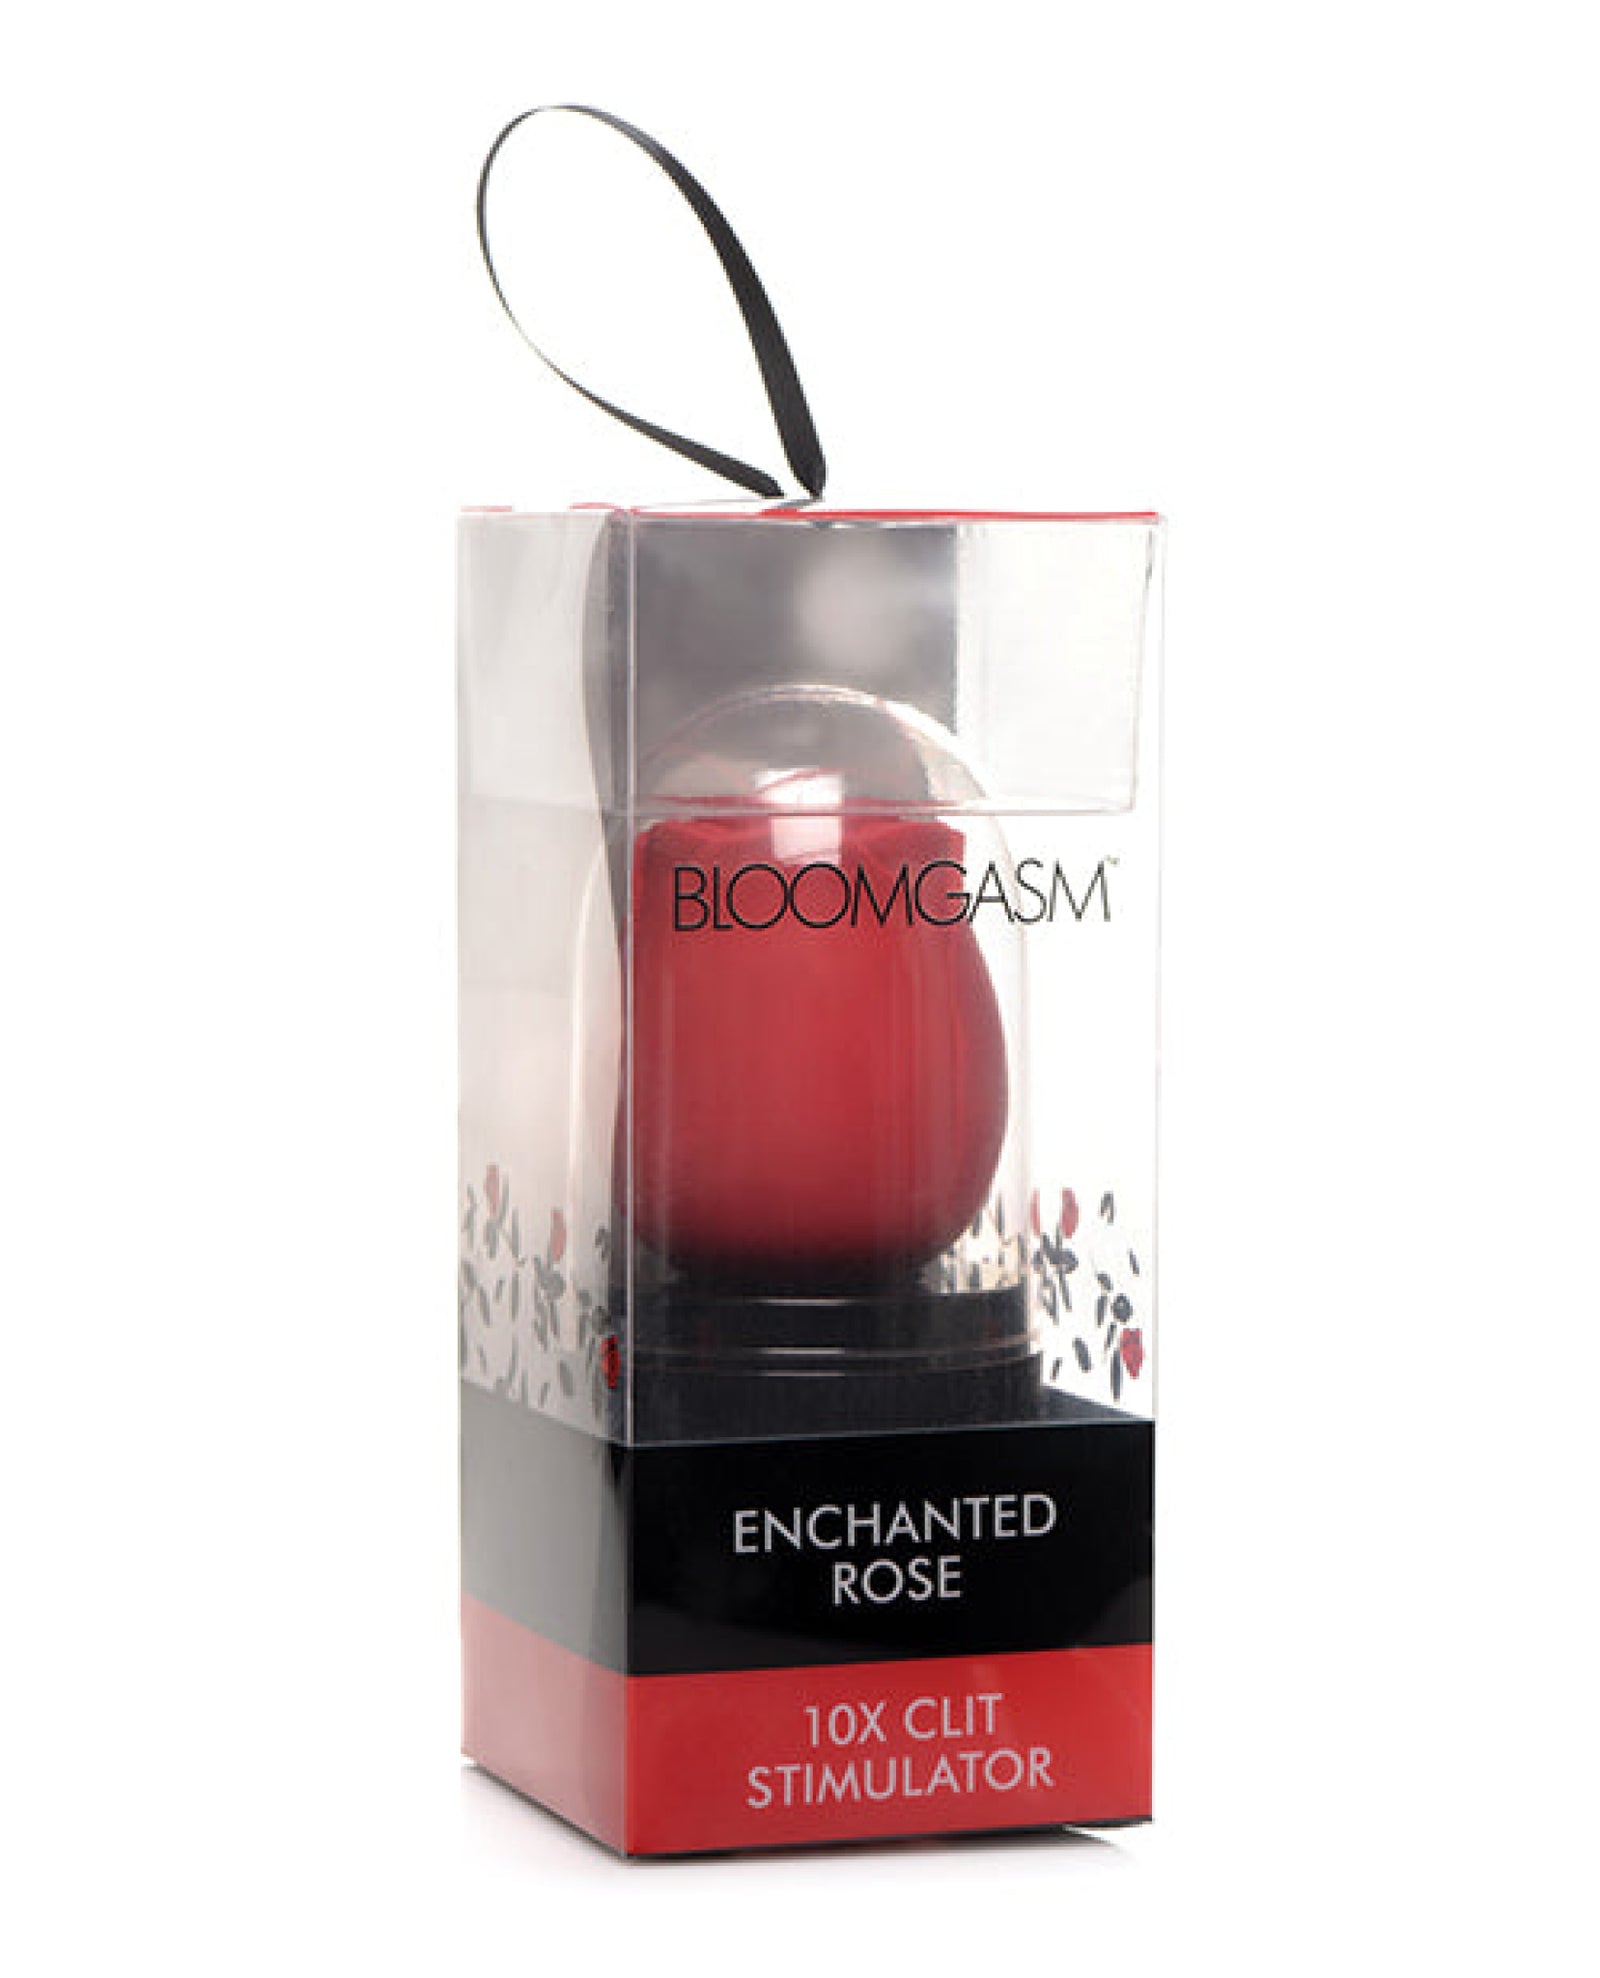 Inmi Bloomgasm Wild Rose 10x Stimulator W-case - Red Inmi